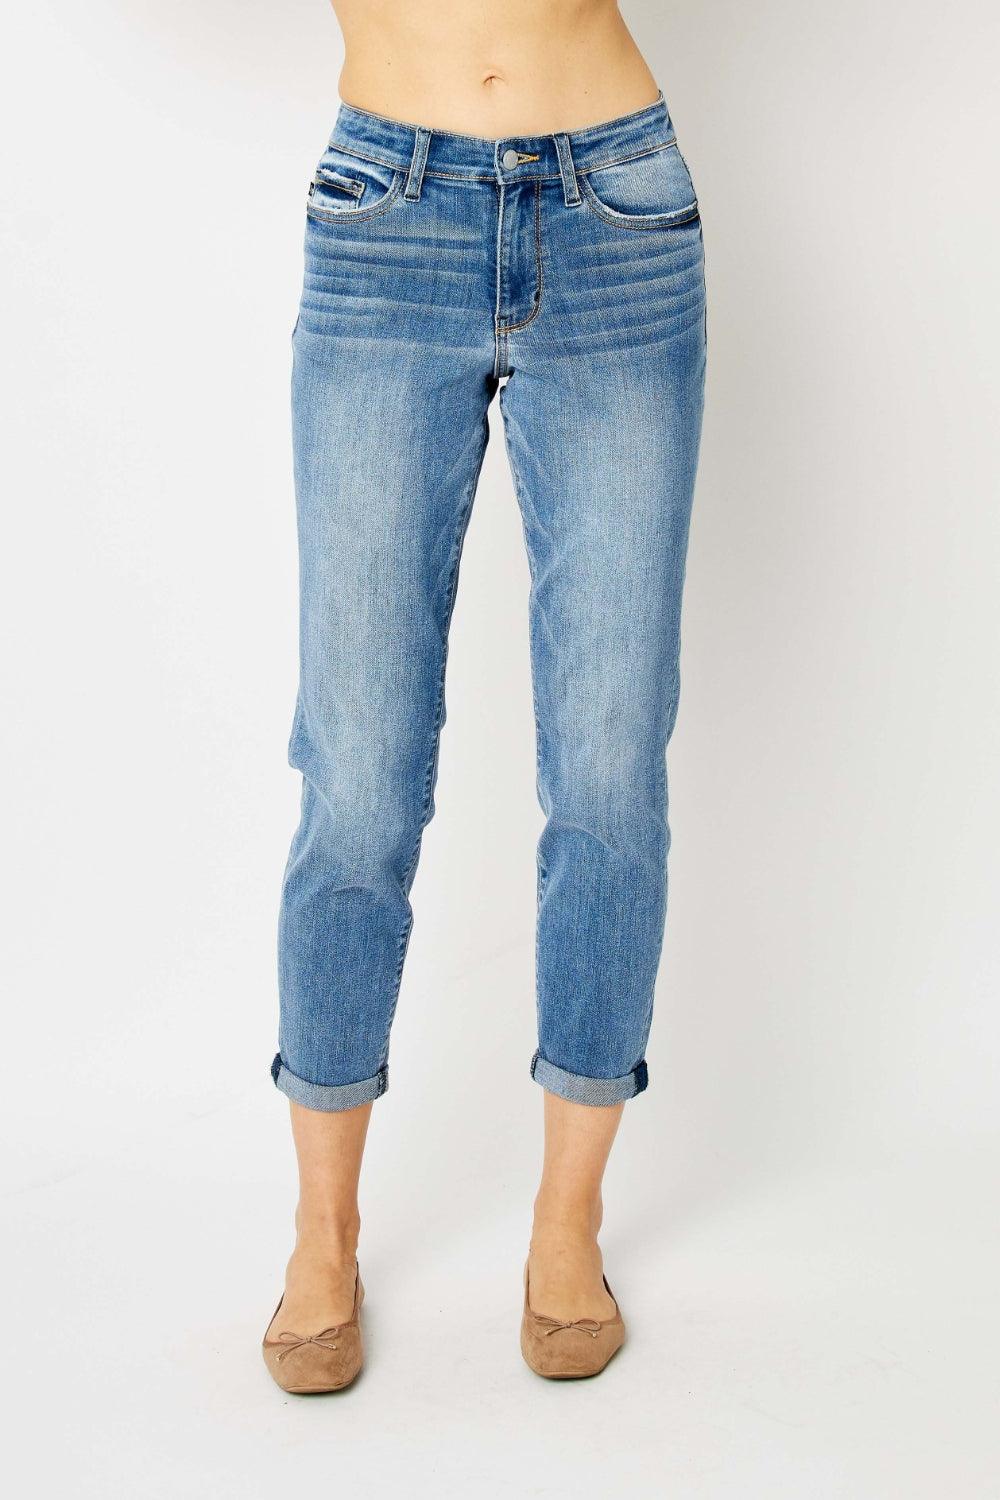 Judy Blue Cuffed Hem Slim Jeans - Jessiz Boutique